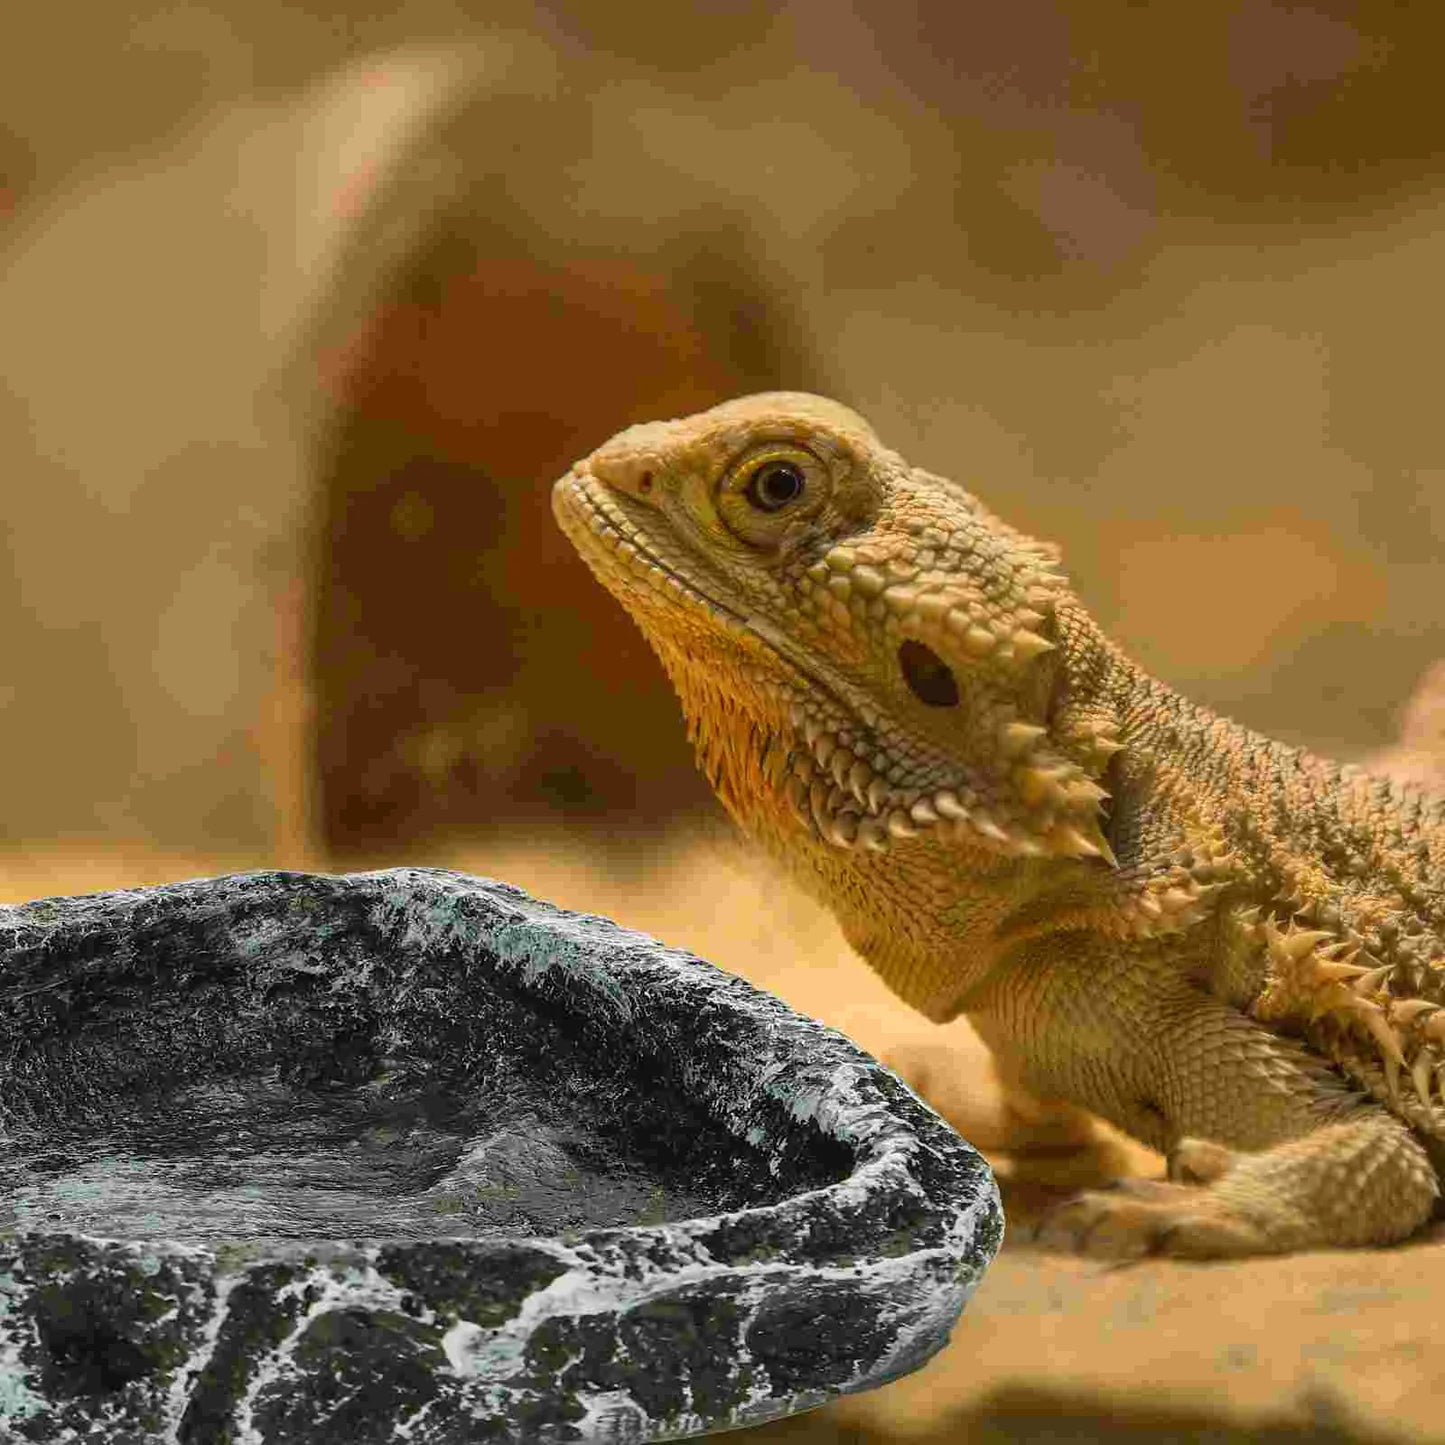 Reptile Fogger Water Basin Pet Feeding Container Food Bowl Spider Terrarium Resin Tortoise Crawling Holder